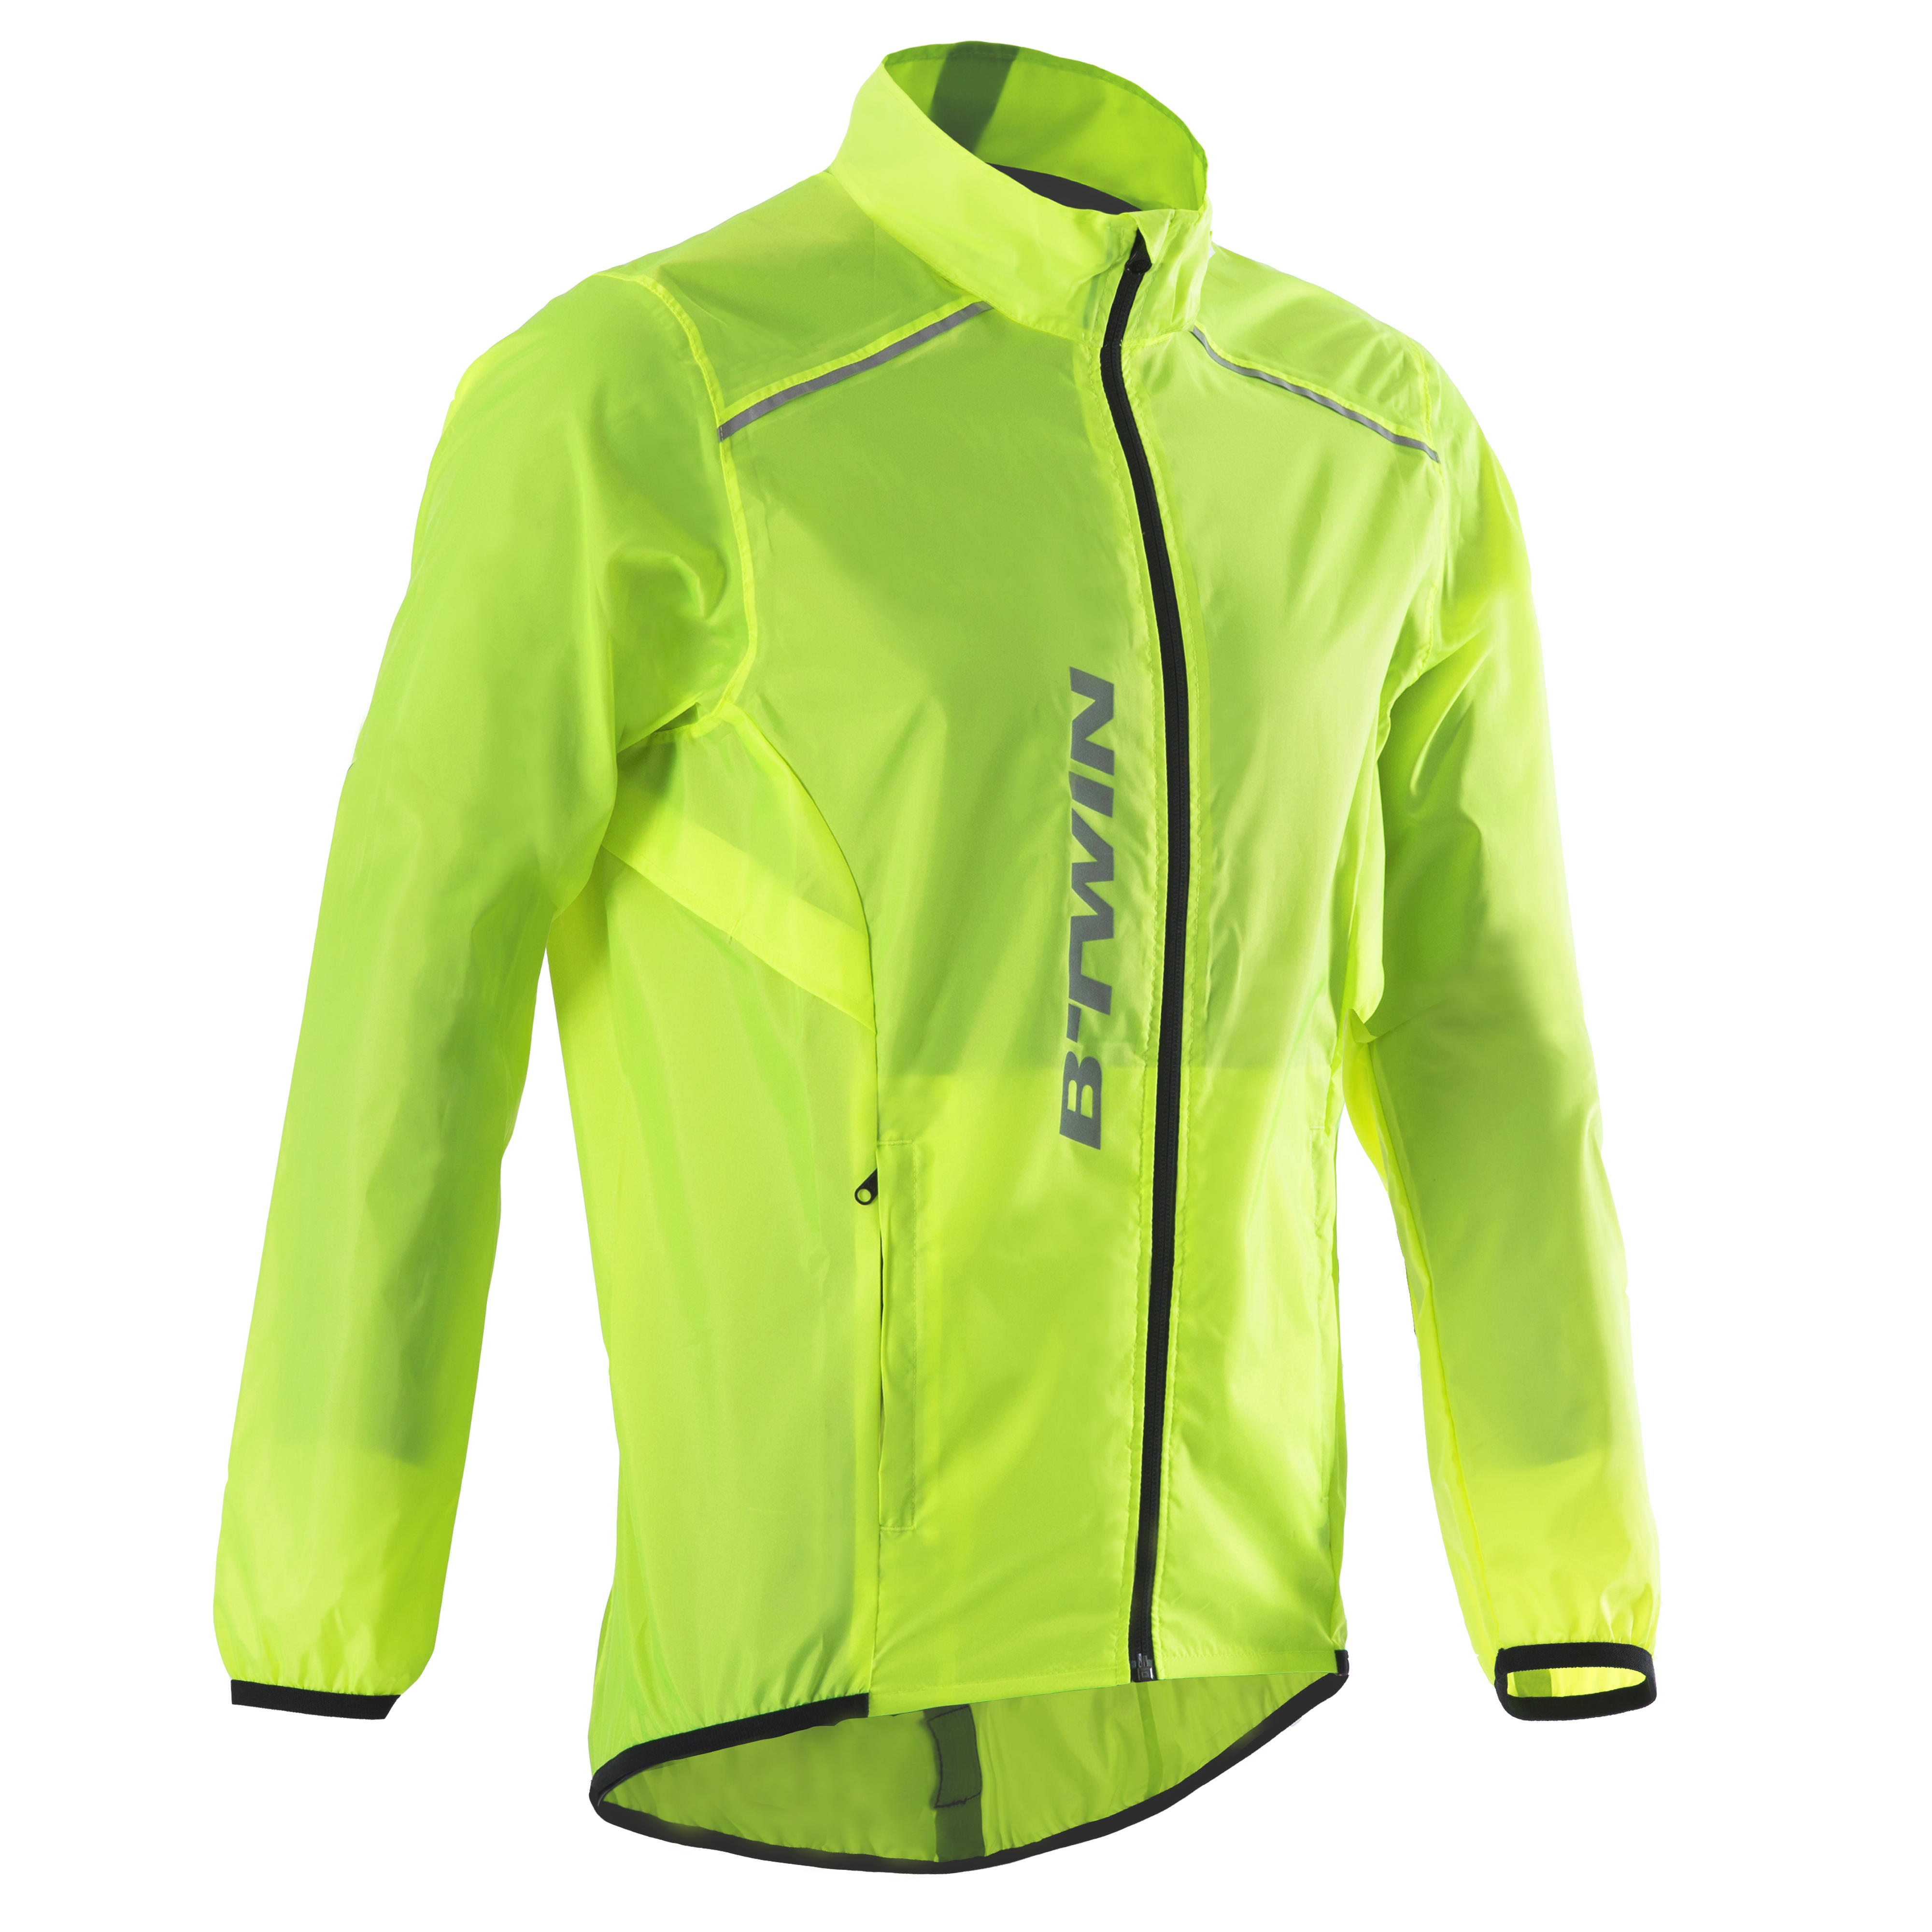 decathlon cycling jacket